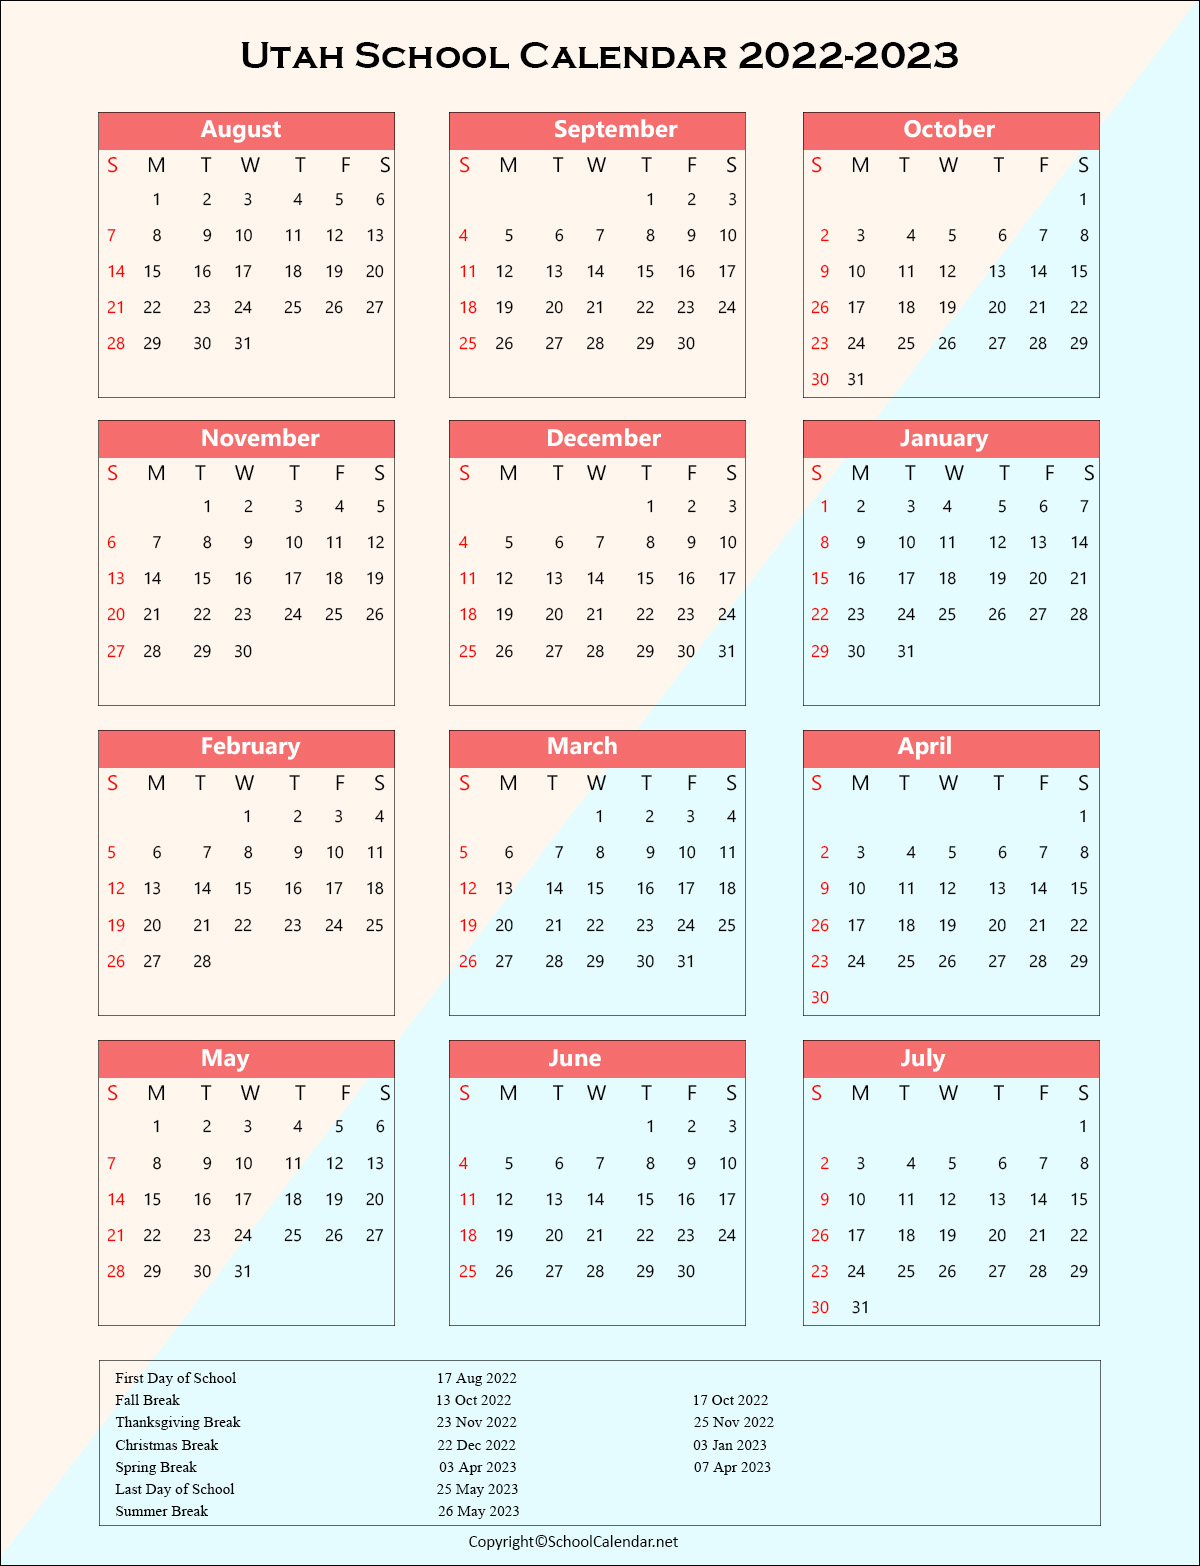 Utah School Holiday Calendar 2022